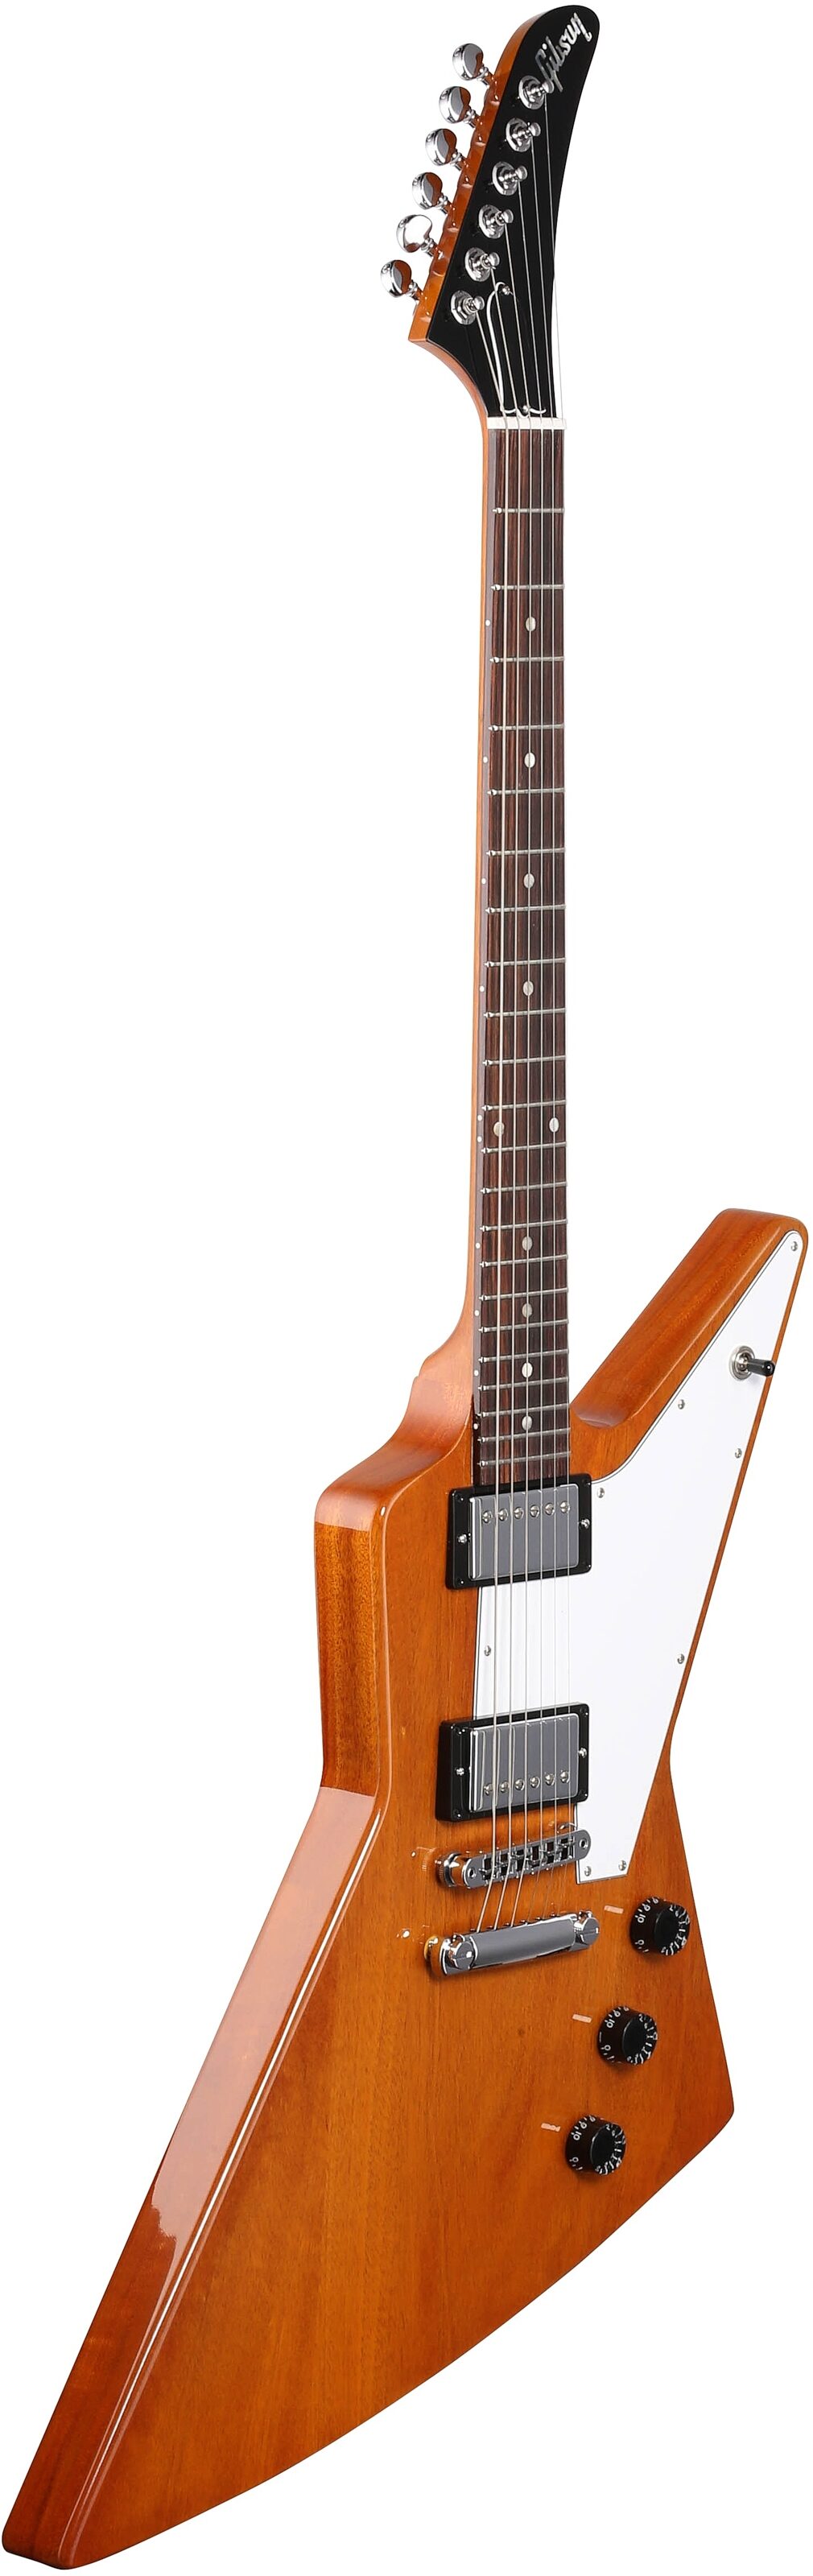 Gibson Explorer Electric Guitar With Case Zzounds